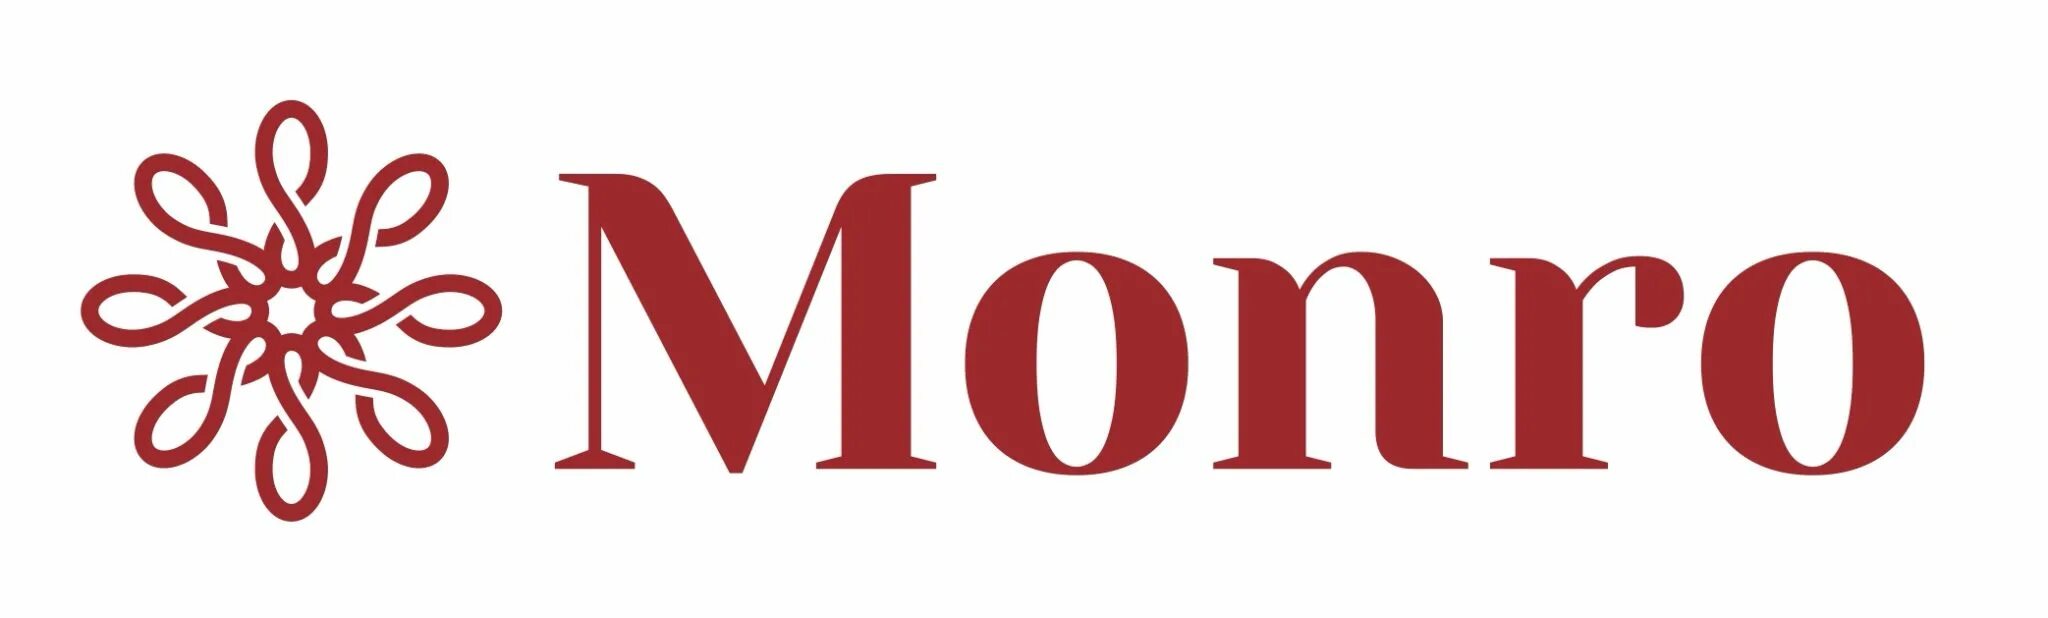 Monro com. Монро логотип. Monro обувь логотип. Монро магазин логотипы. Логотип обувного магазина.